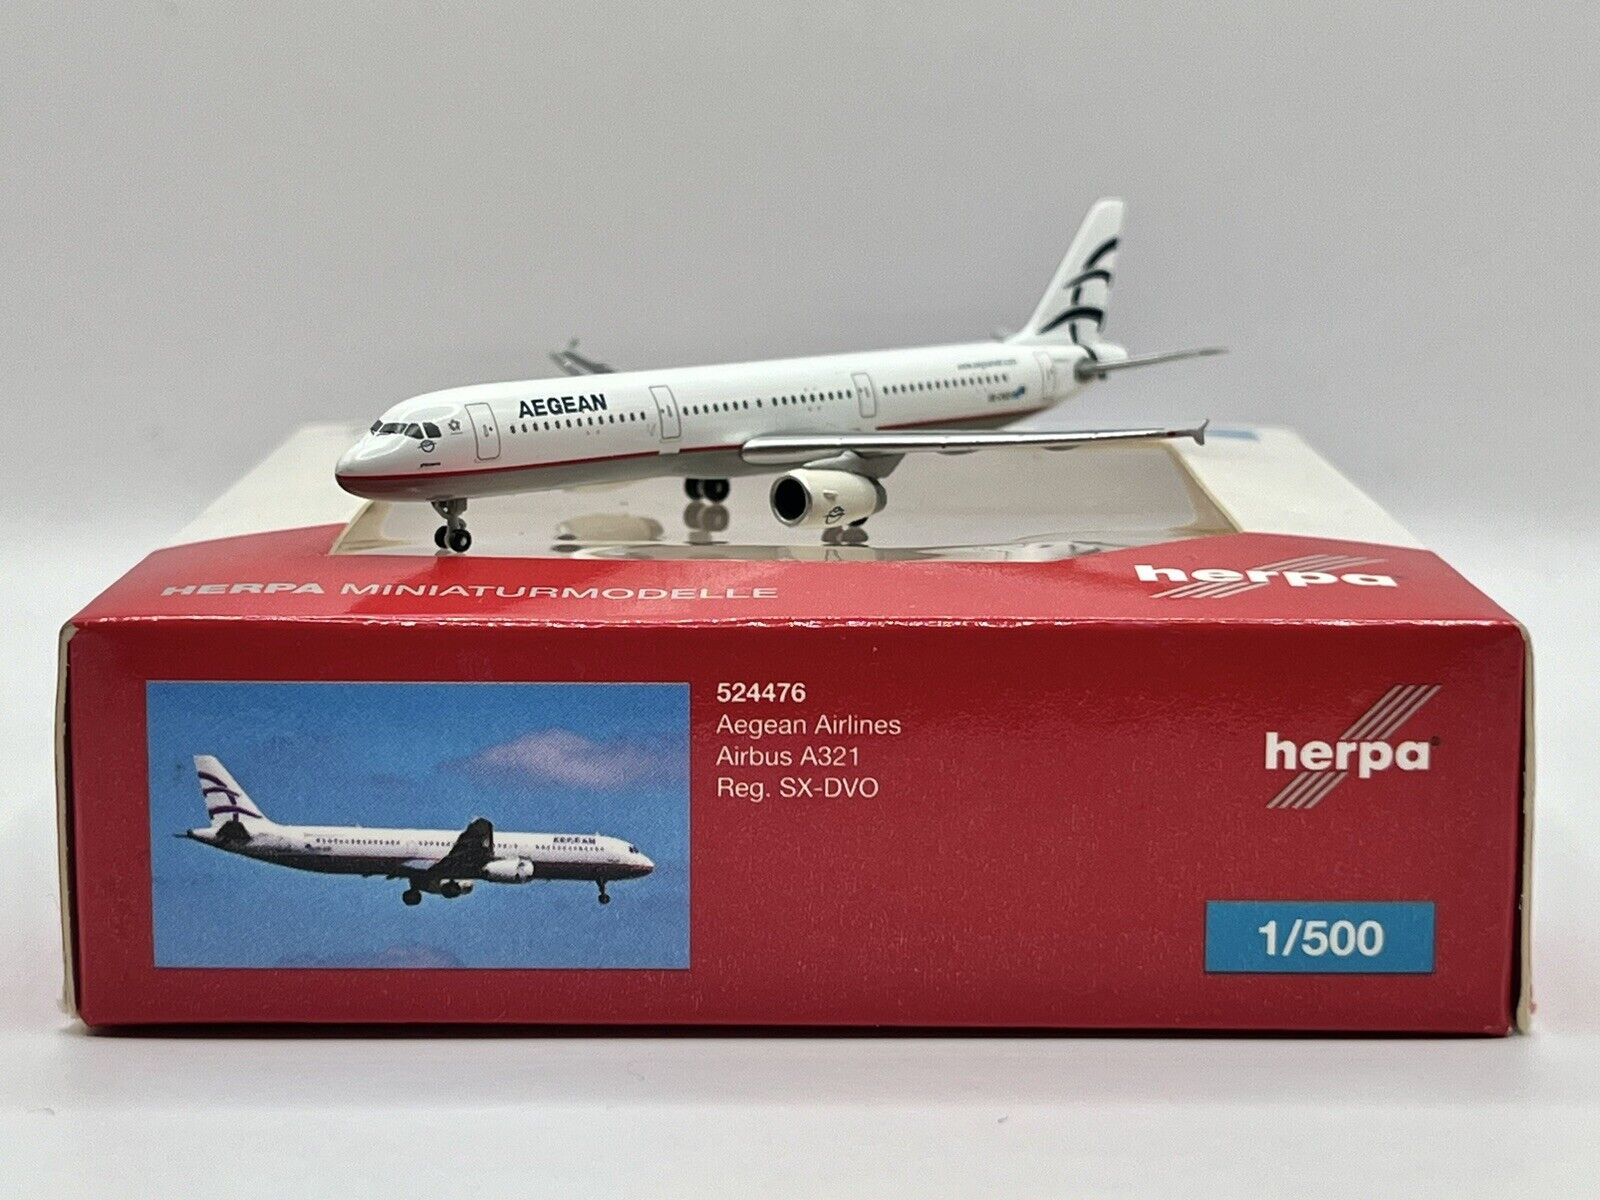 Herpa 524476 Aegean Airlines Airbus A321 SX-DVO 1/500